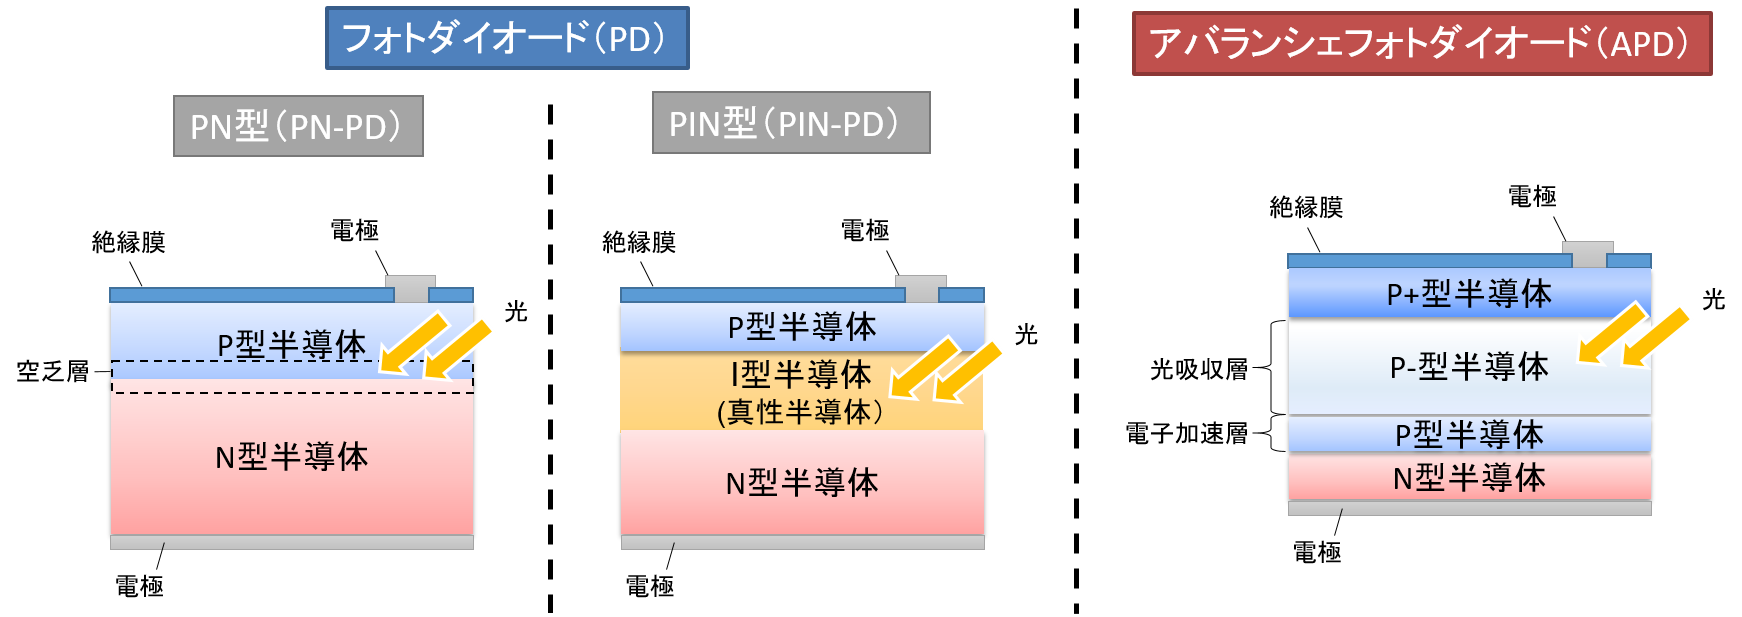 PN_PIN_PD_APD2.png